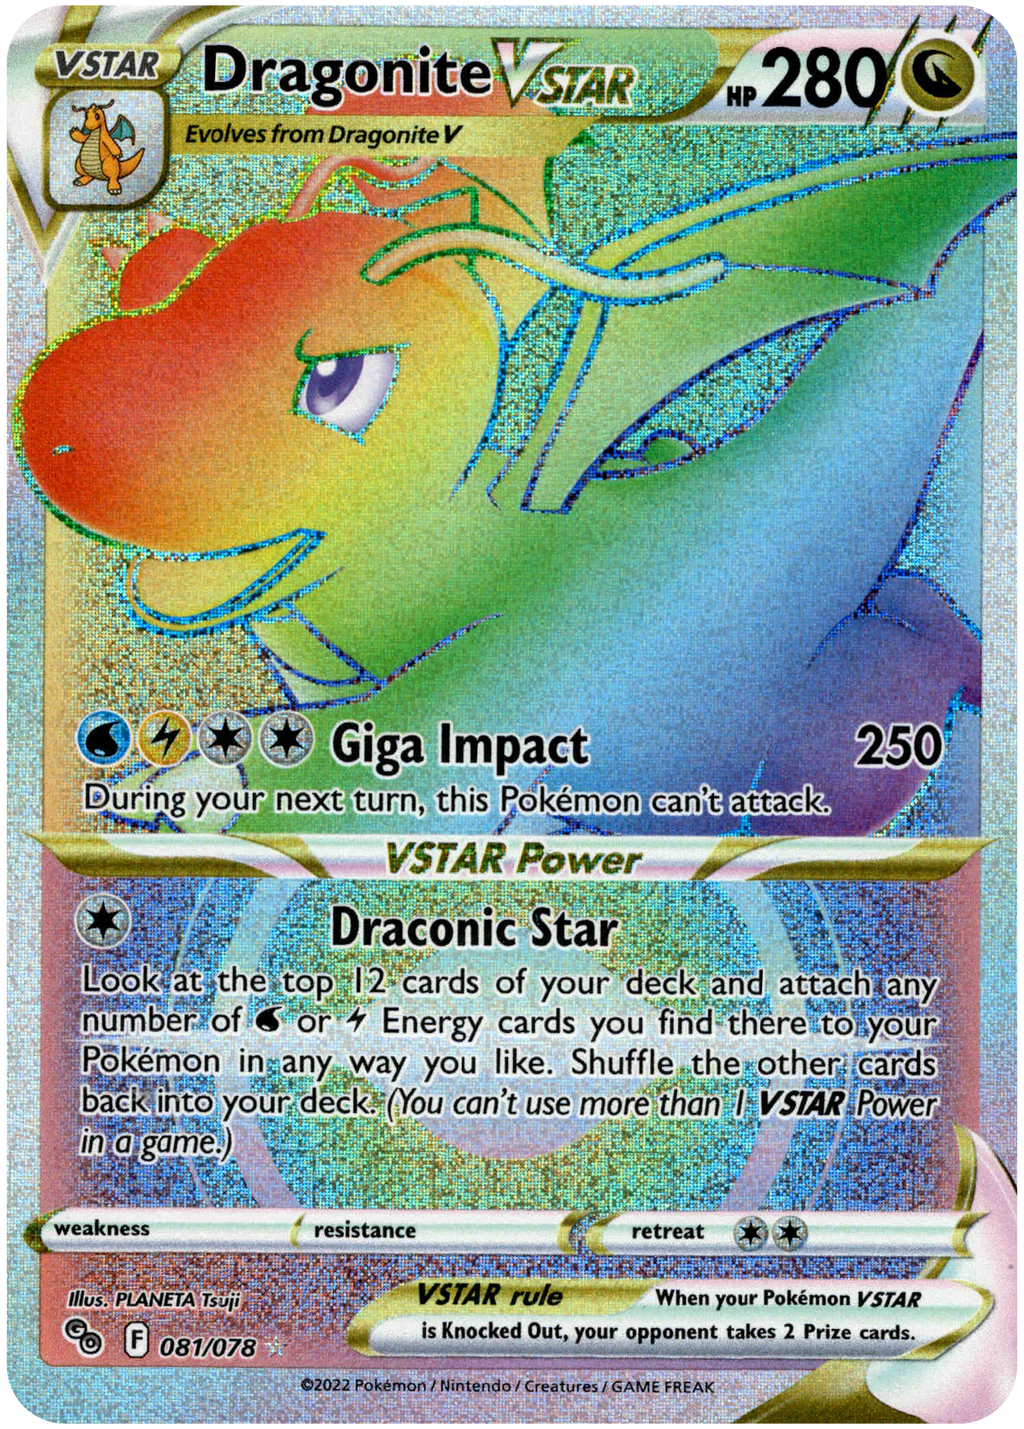 Lugia-VSTAR 202/195 in Portuguese Silver Tempest Pokémon TCG